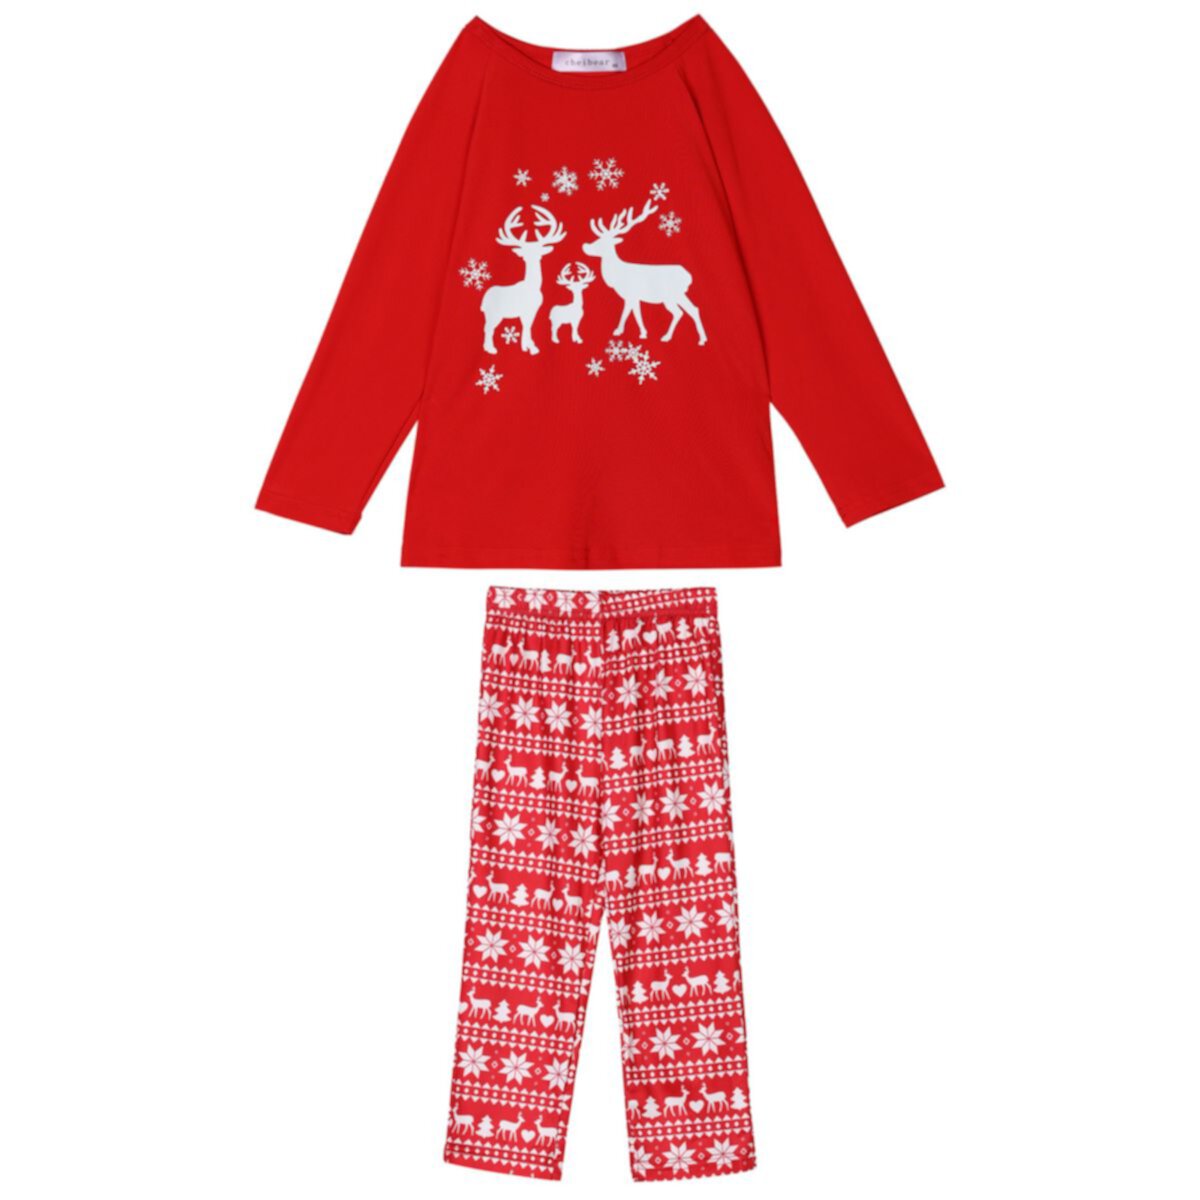 cheibear Women's 2 Piece Pajama Sets Christmas Deer Long Sleeves Tee and Plaid Pants Loungewear Cheibear